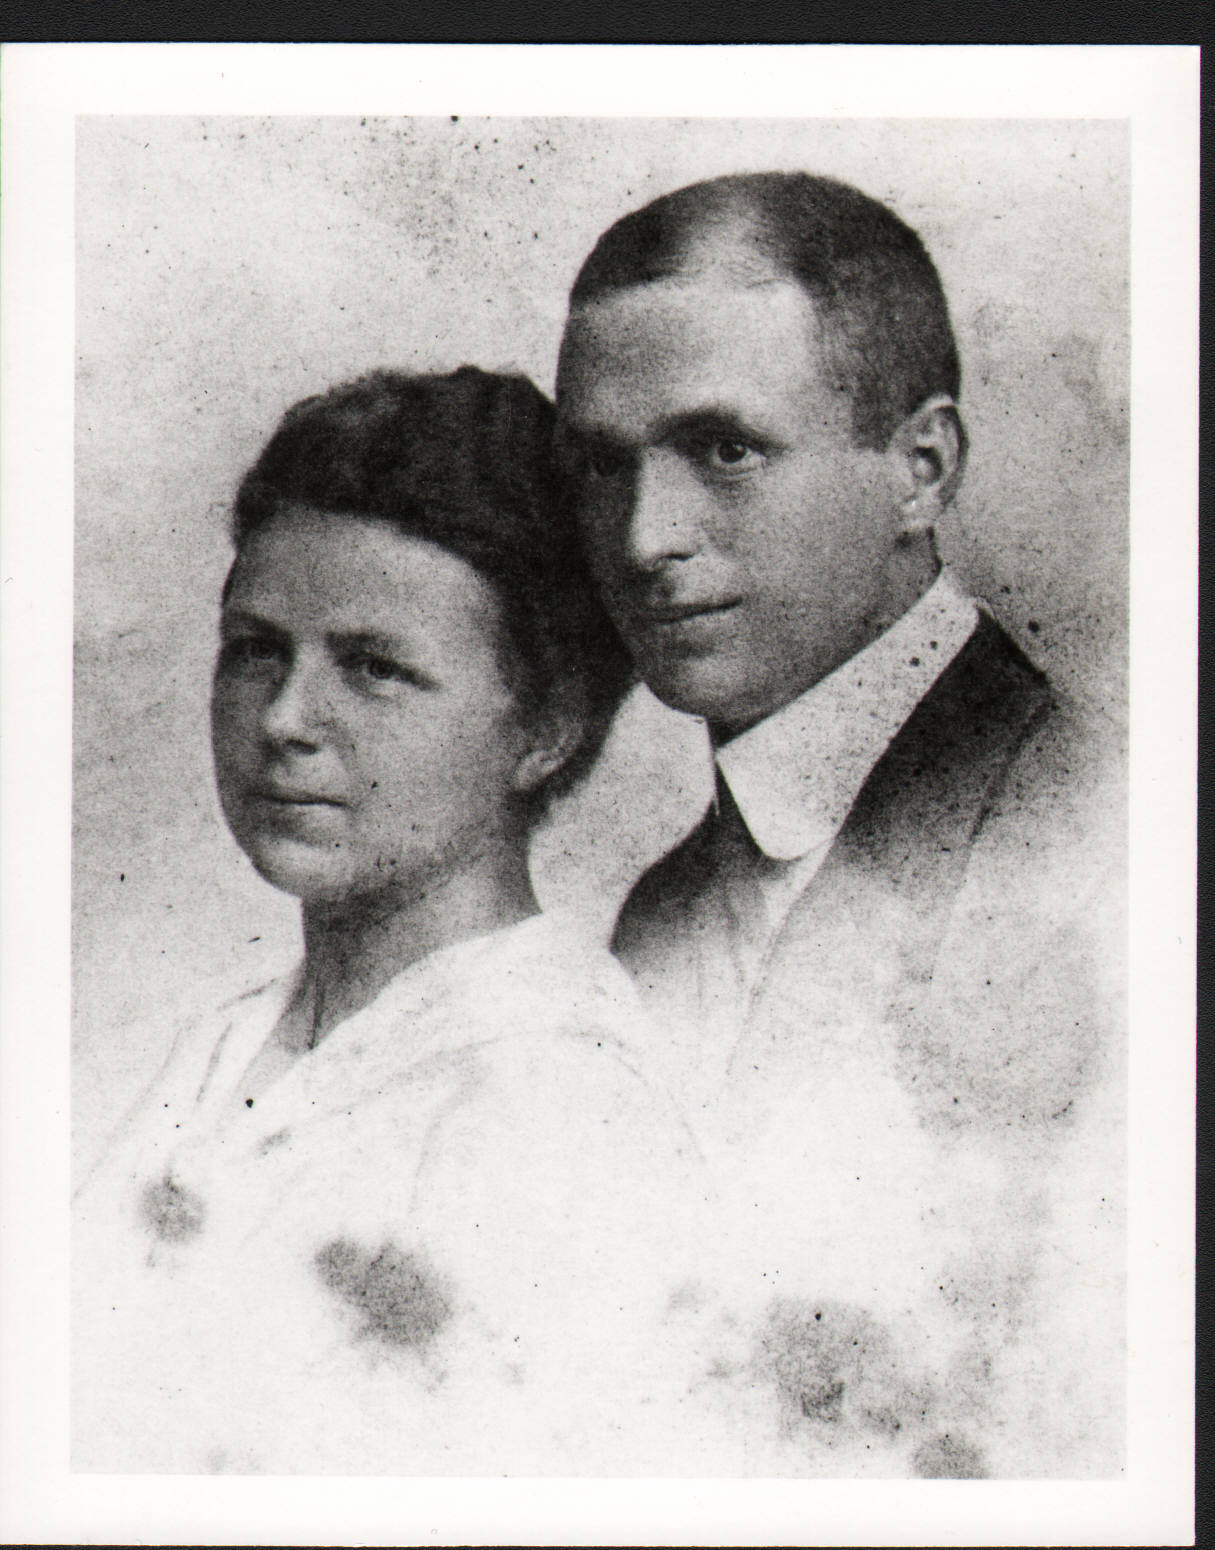 Ruth's parents